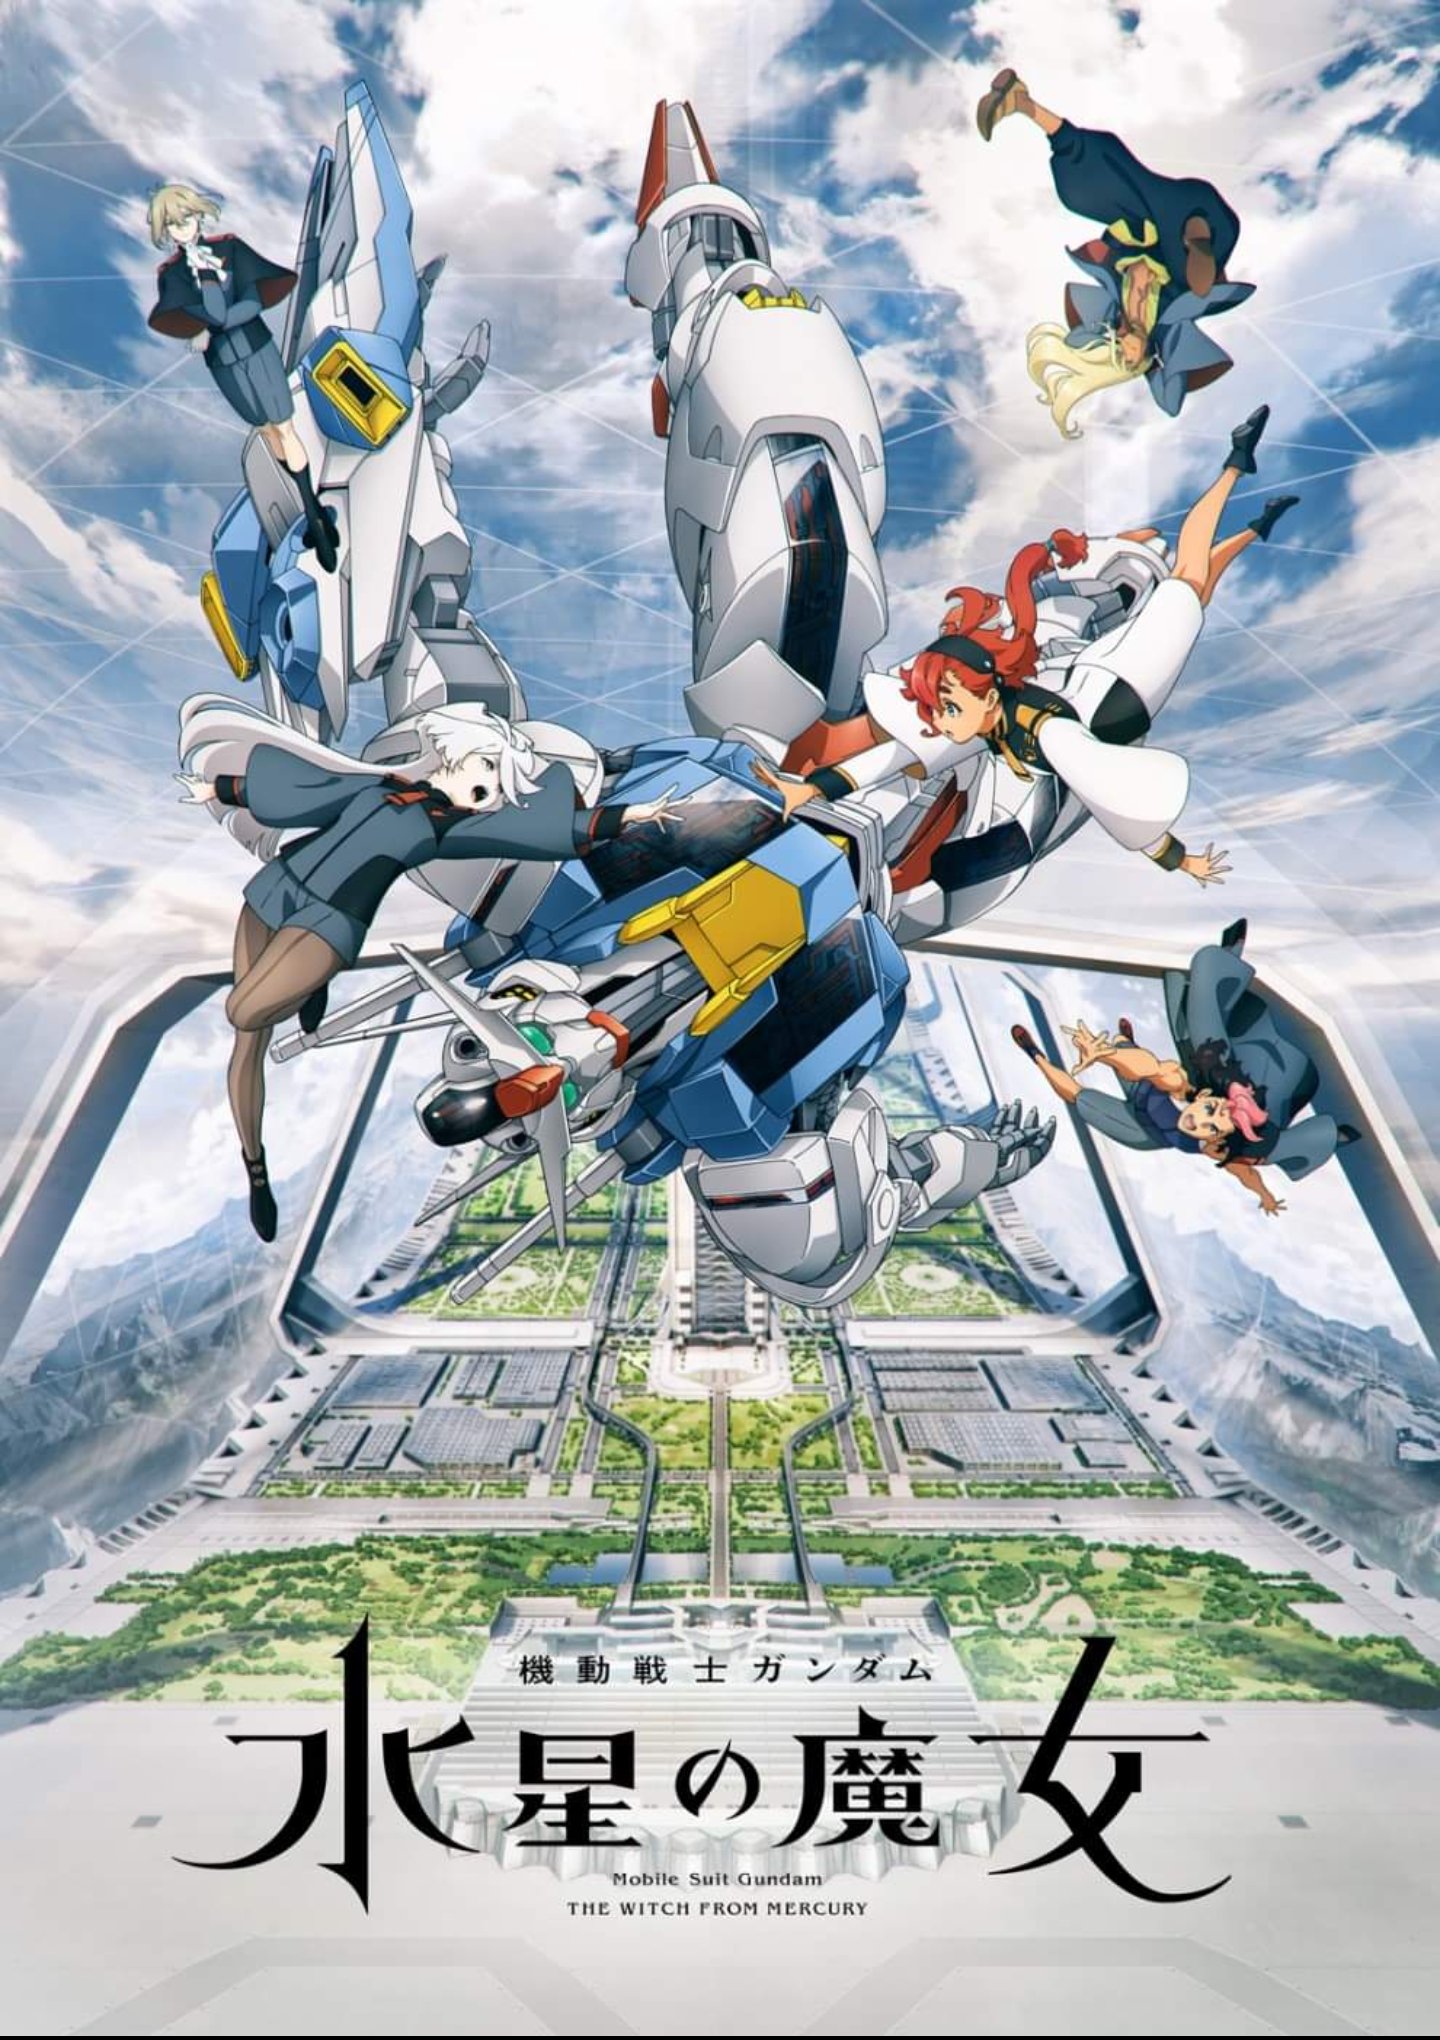 Anime Anime Boys Anime Girls Gundam Mobile Suit Gundam THE WiTCH FROM MERCURY Super Robot Taisen Gun 1440x2040